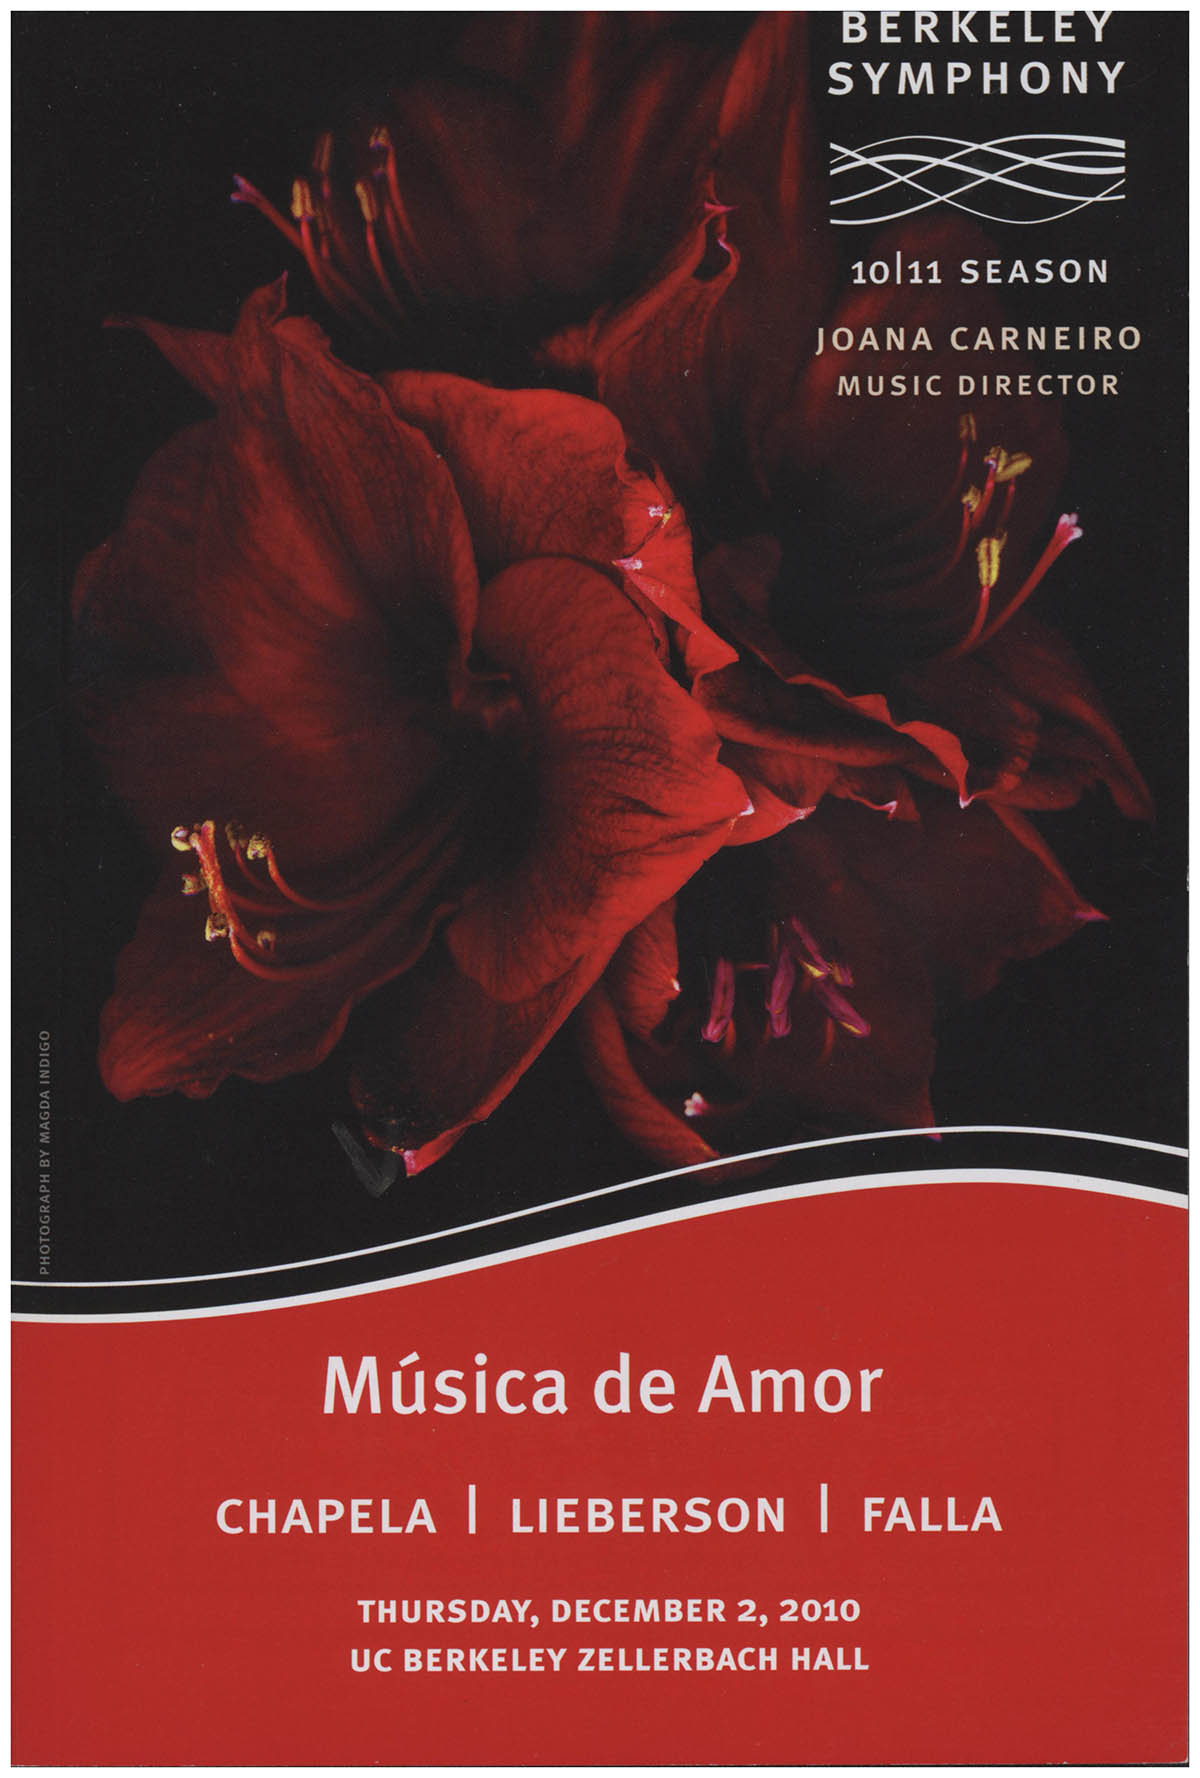 Carneiro, Joana (Music Director) - MSica de Amor: Chapela Lieberson Falla (10/11 Season)